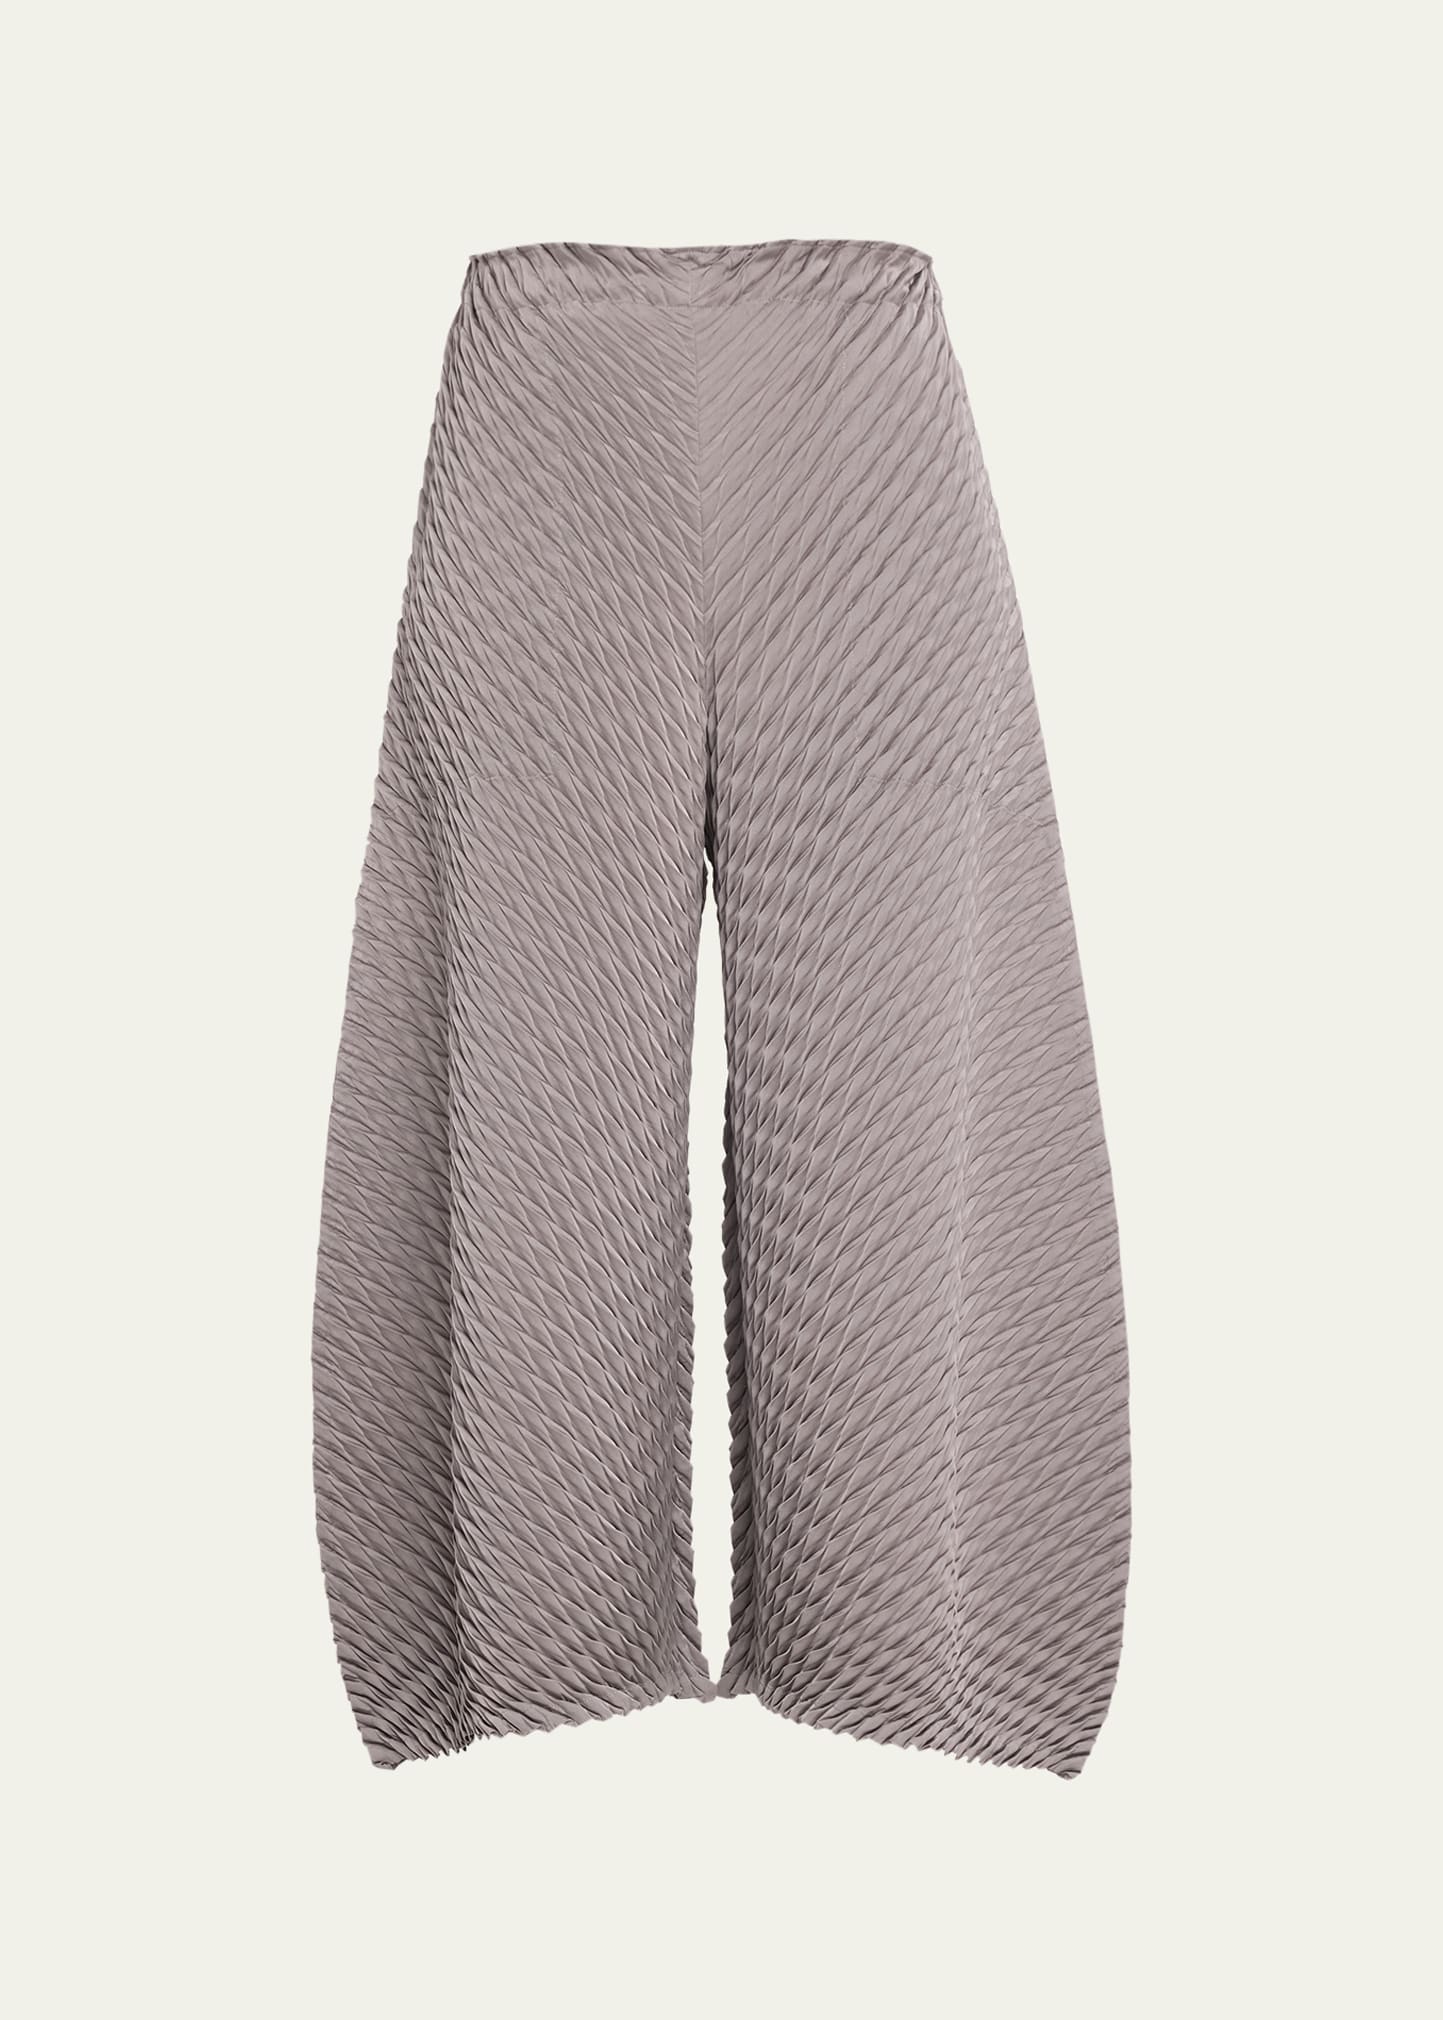 Issey Miyake Gleam Pleats Textured Crop Pants In Gray